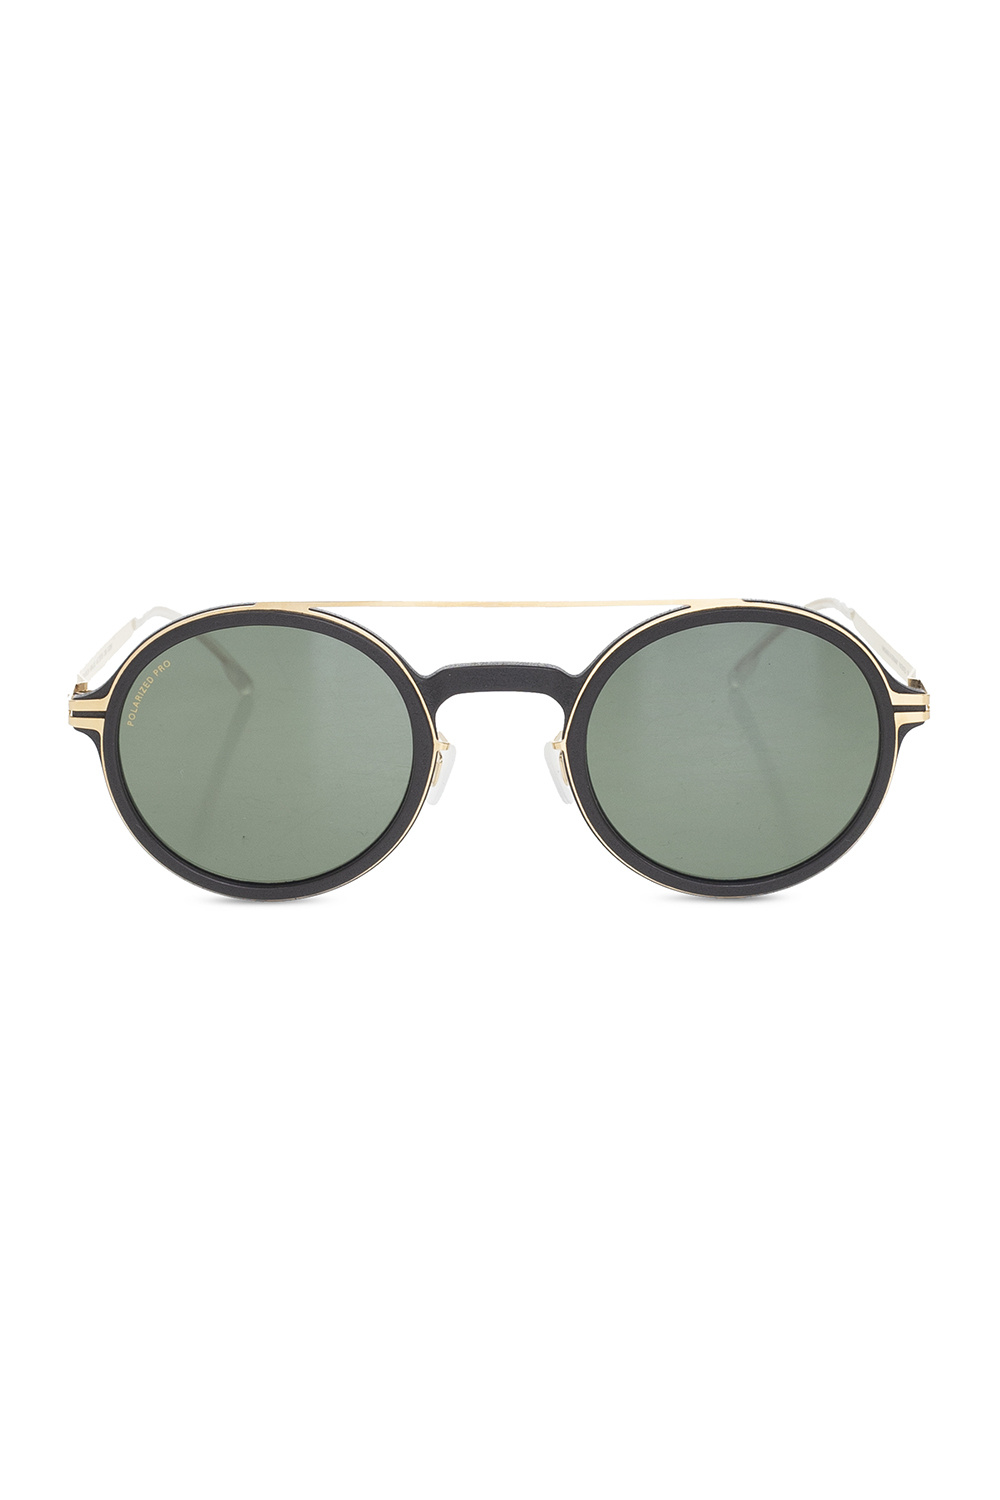 Mykita ‘Hemlock’ sunglasses